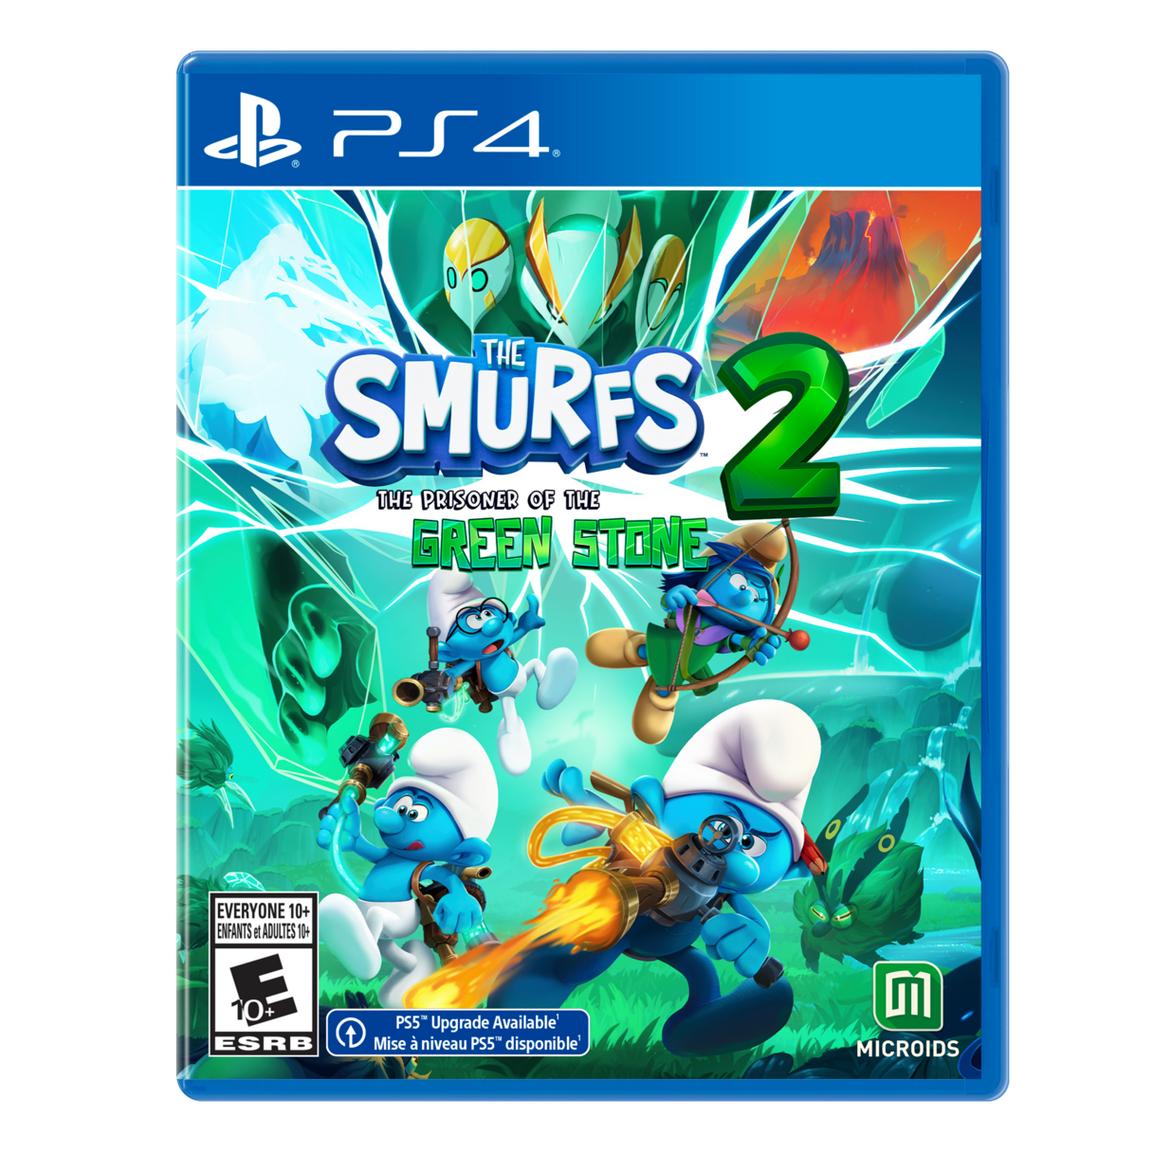 Видеоигра The Smurfs 2: Prisoner of the Green Stone - PlayStation 4 ps4 игра microids smurfs kart стандартное издание